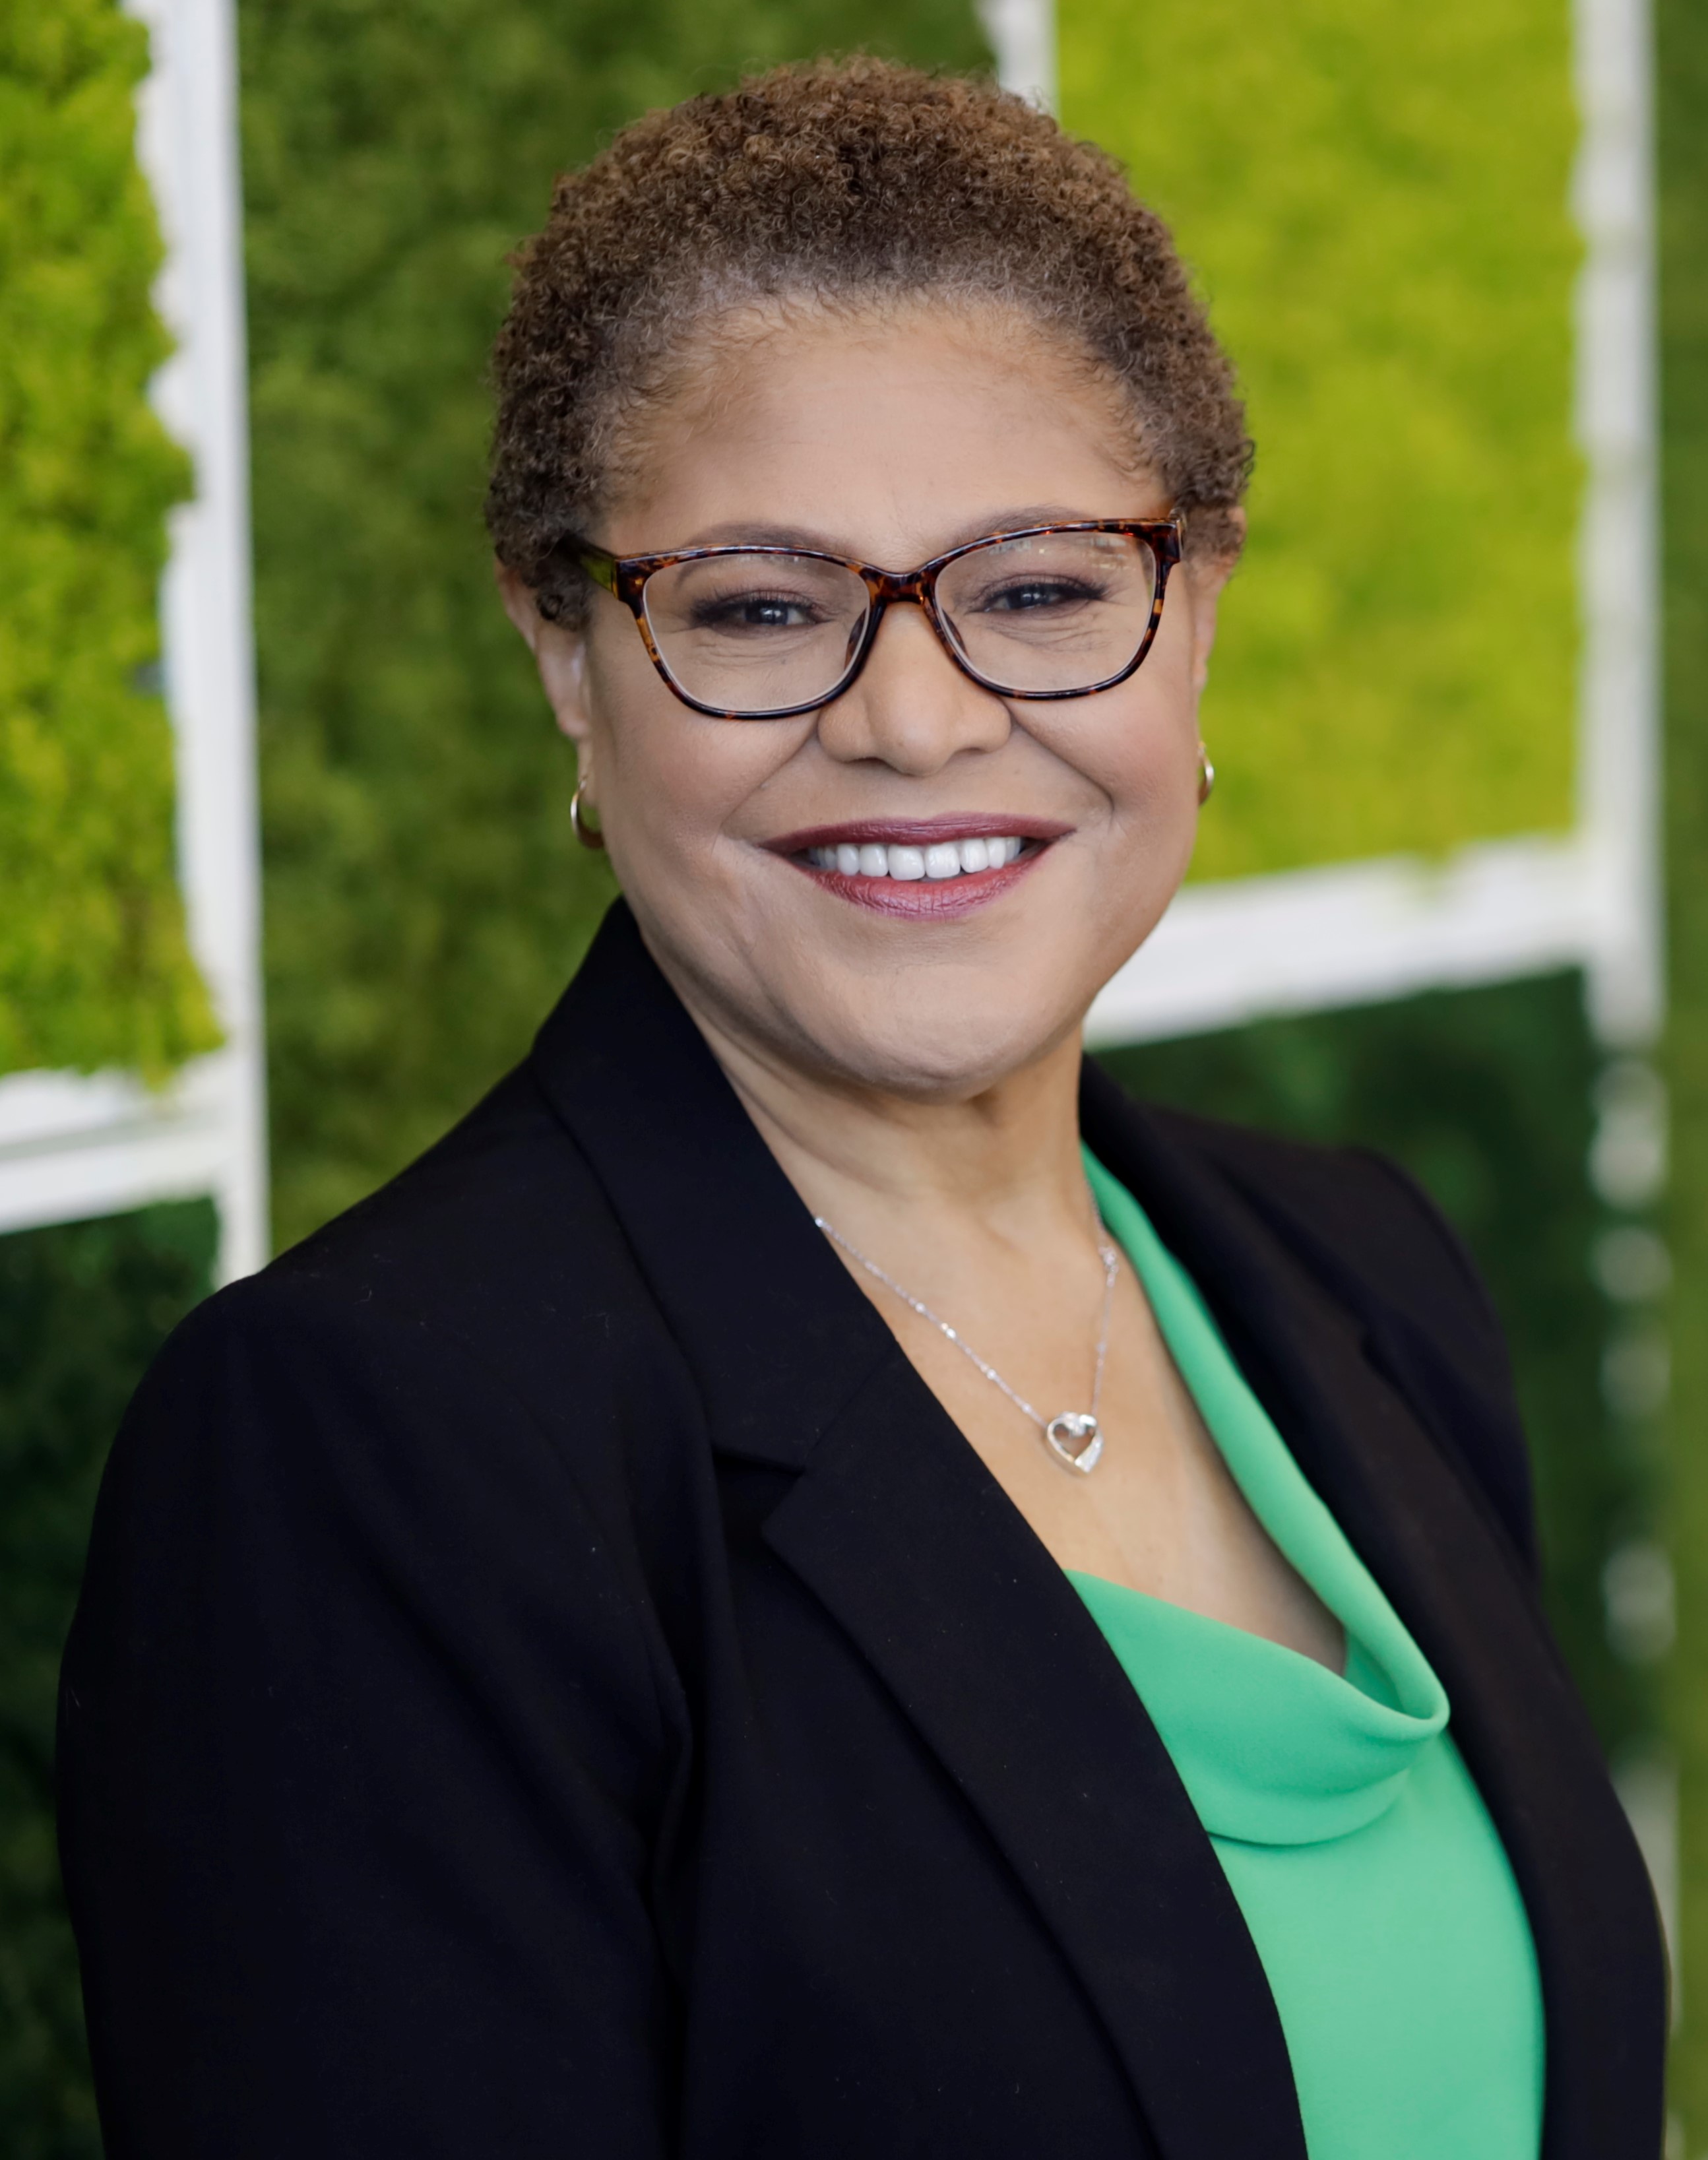 LA elects US Rep Karen Bass mayor, first Black woman in post